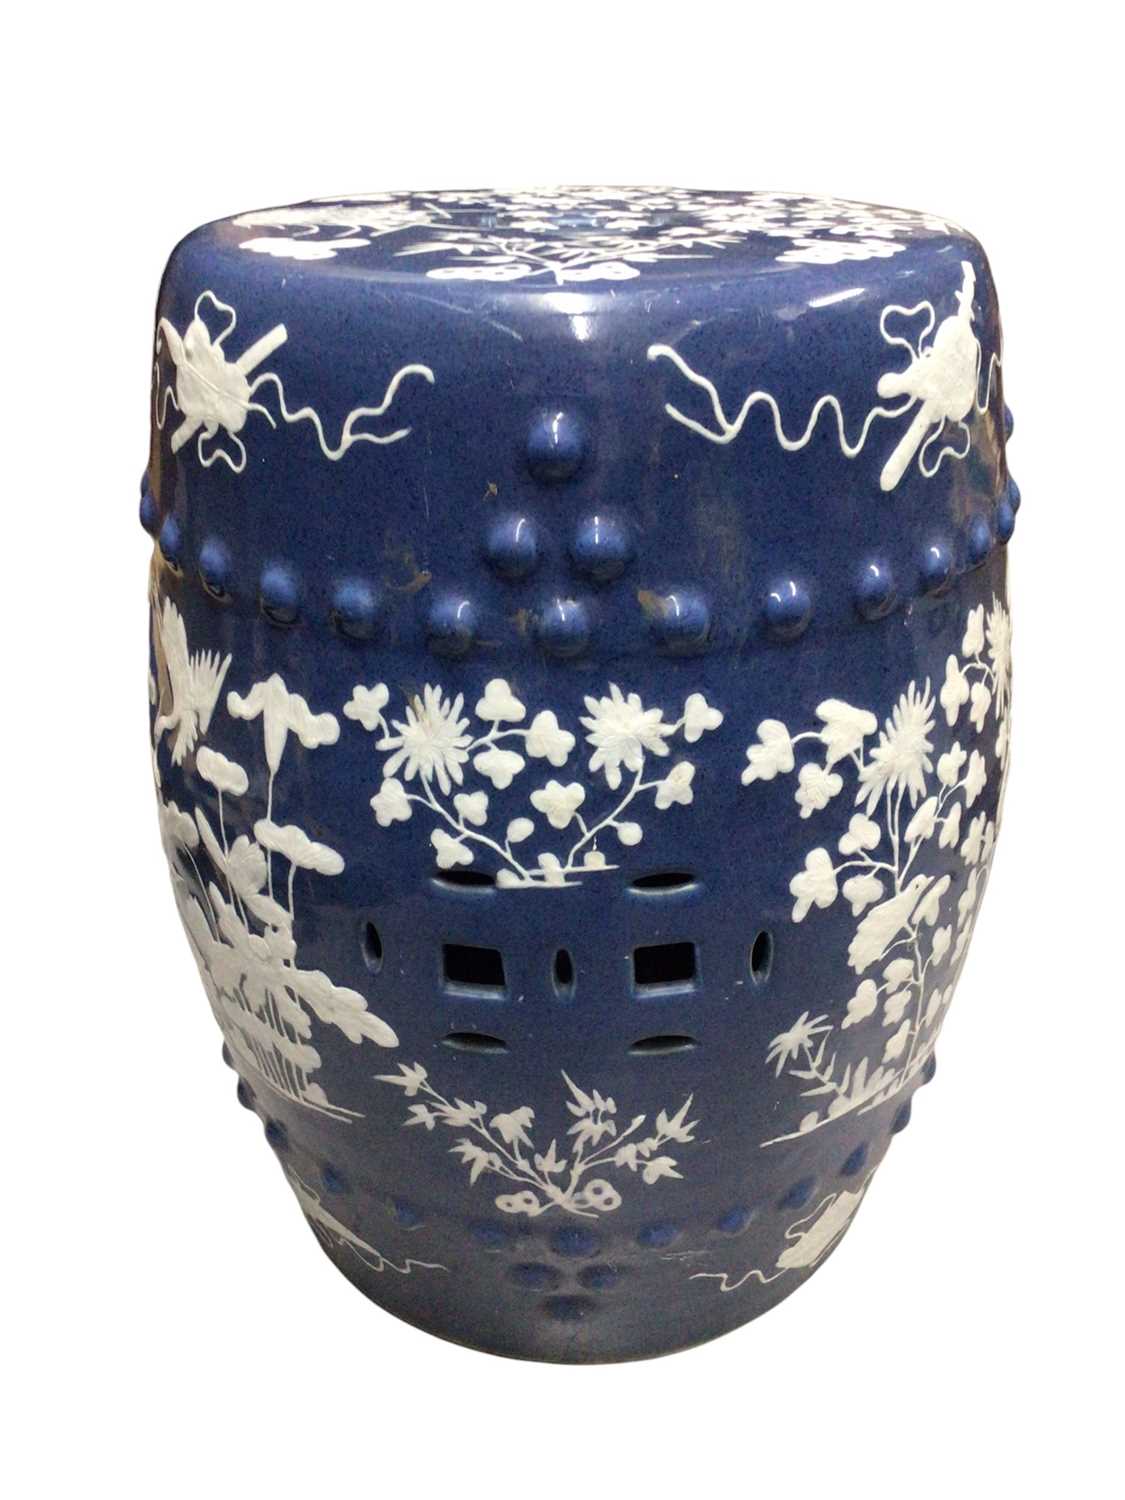 Chinese ceramic garden seat - Image 2 of 3